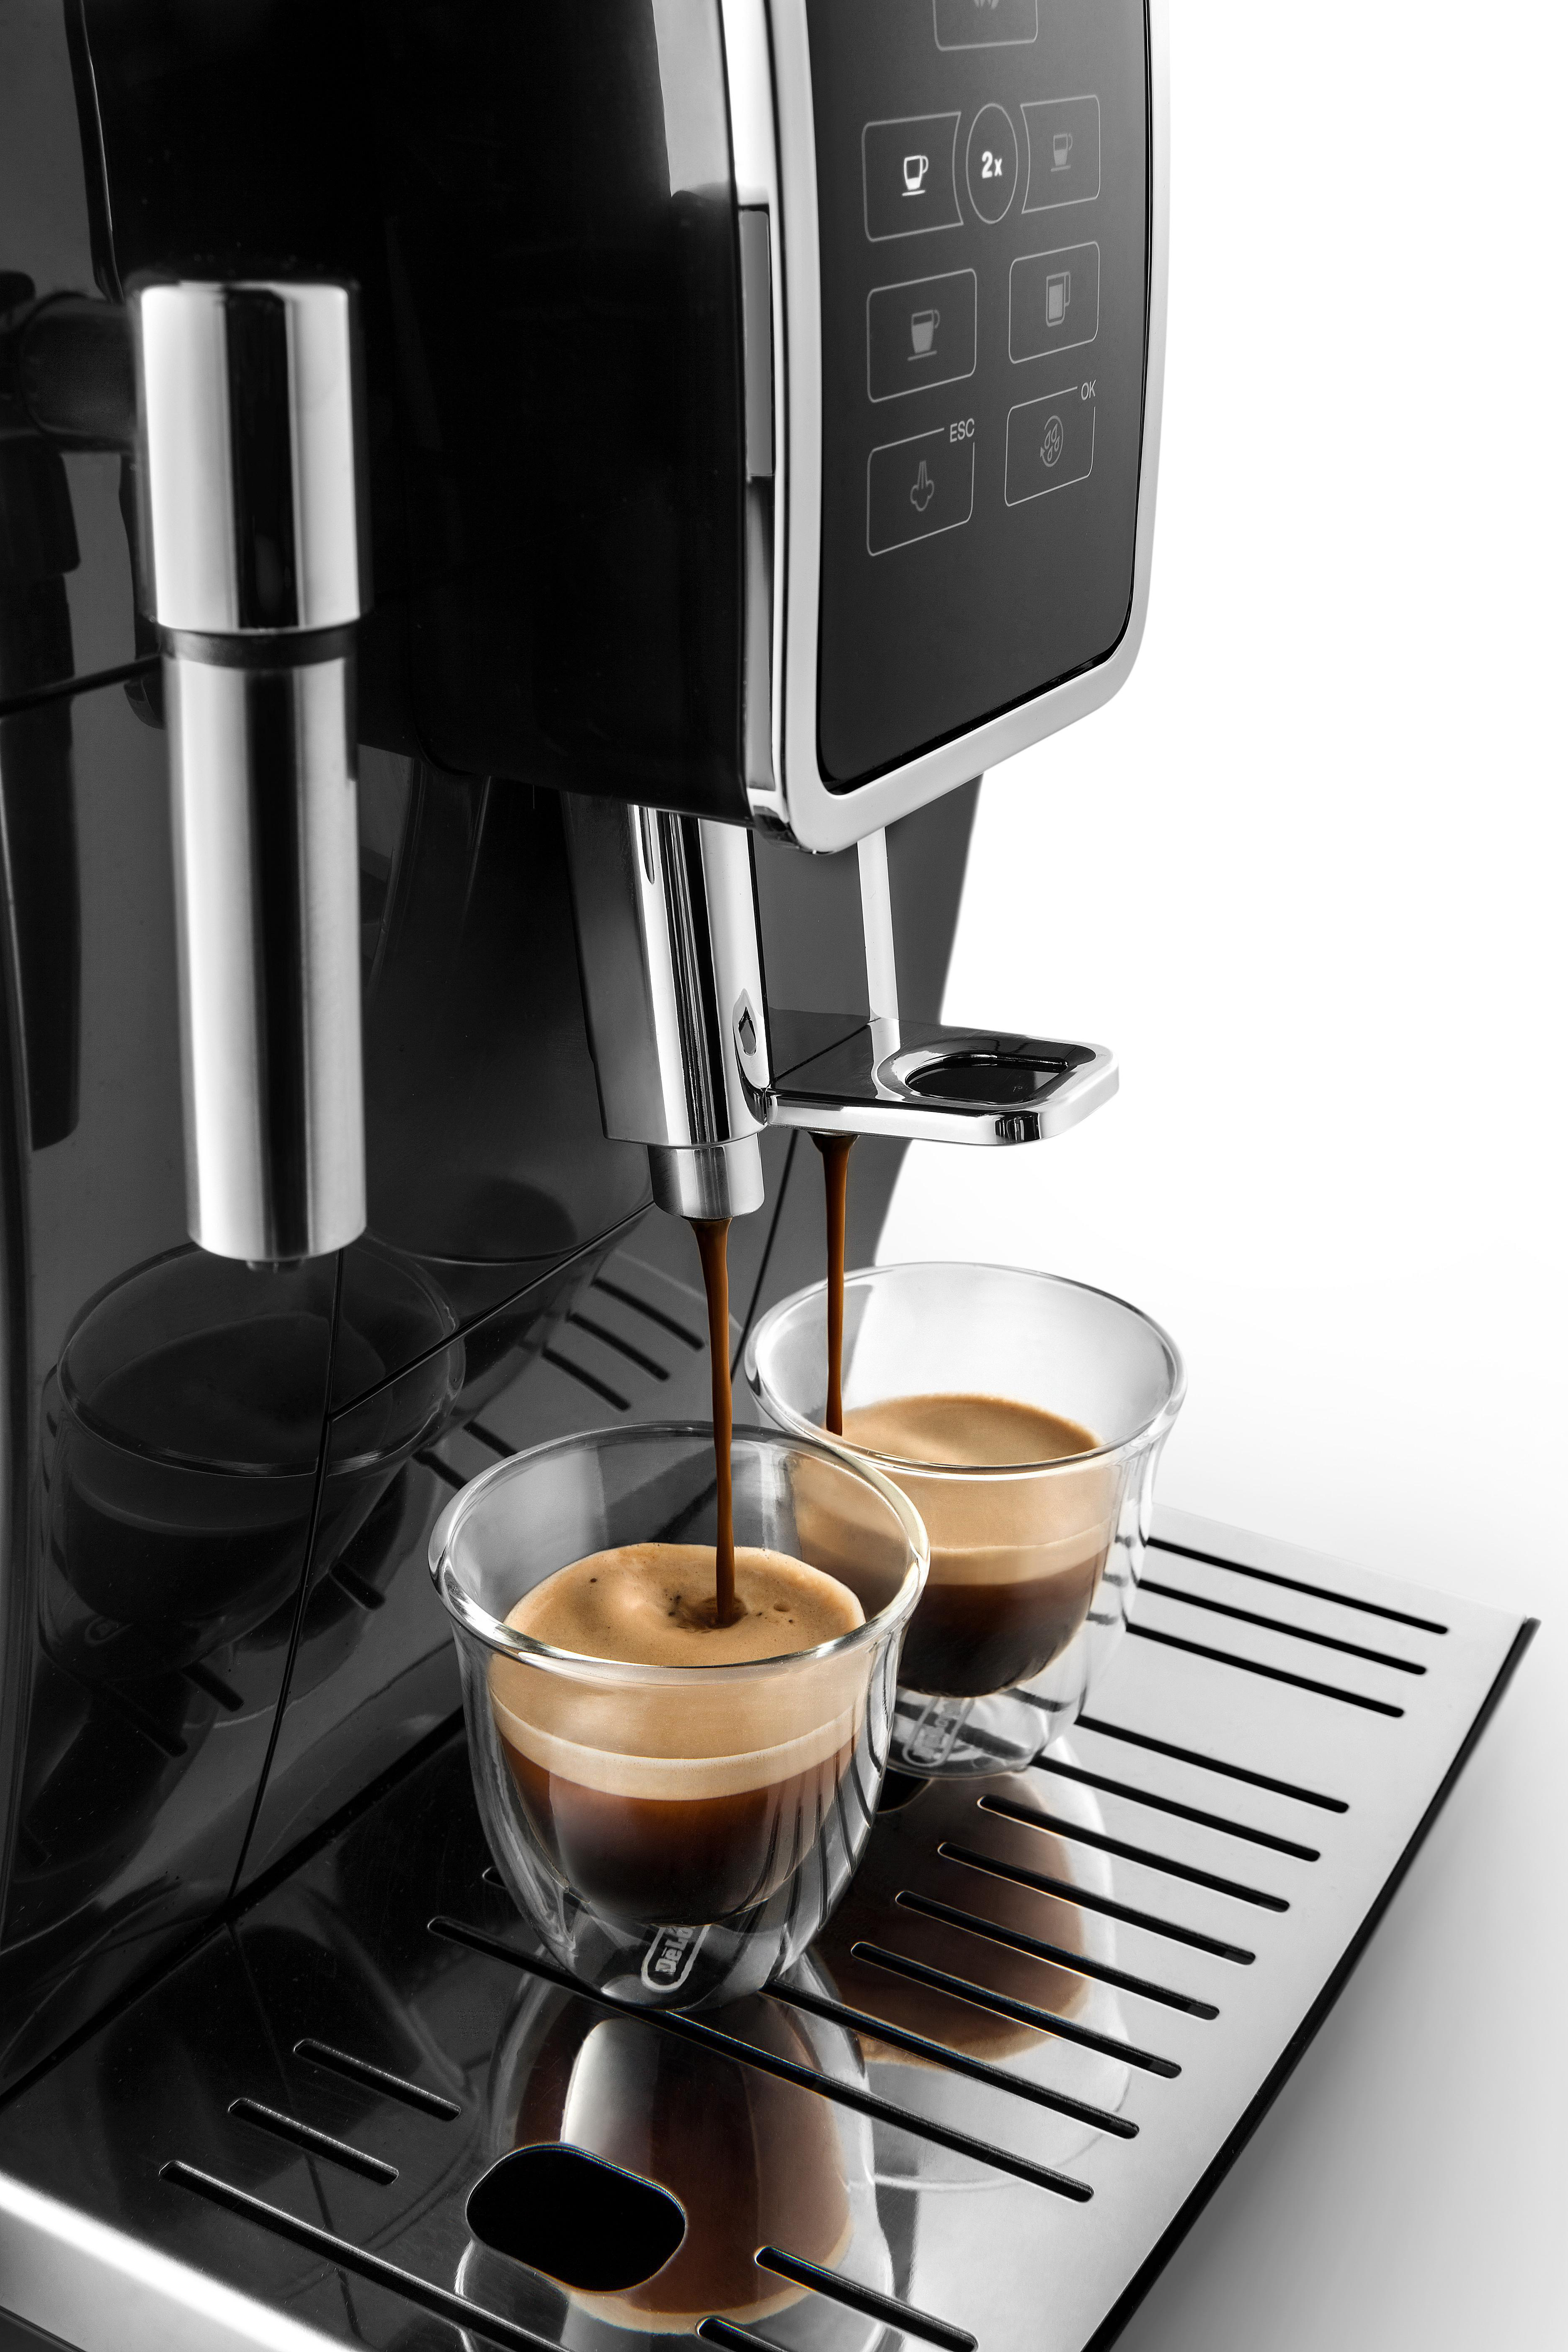 Dinamica Schwarz ECAM350.15.B Kaffeevollautomat DELONGHI